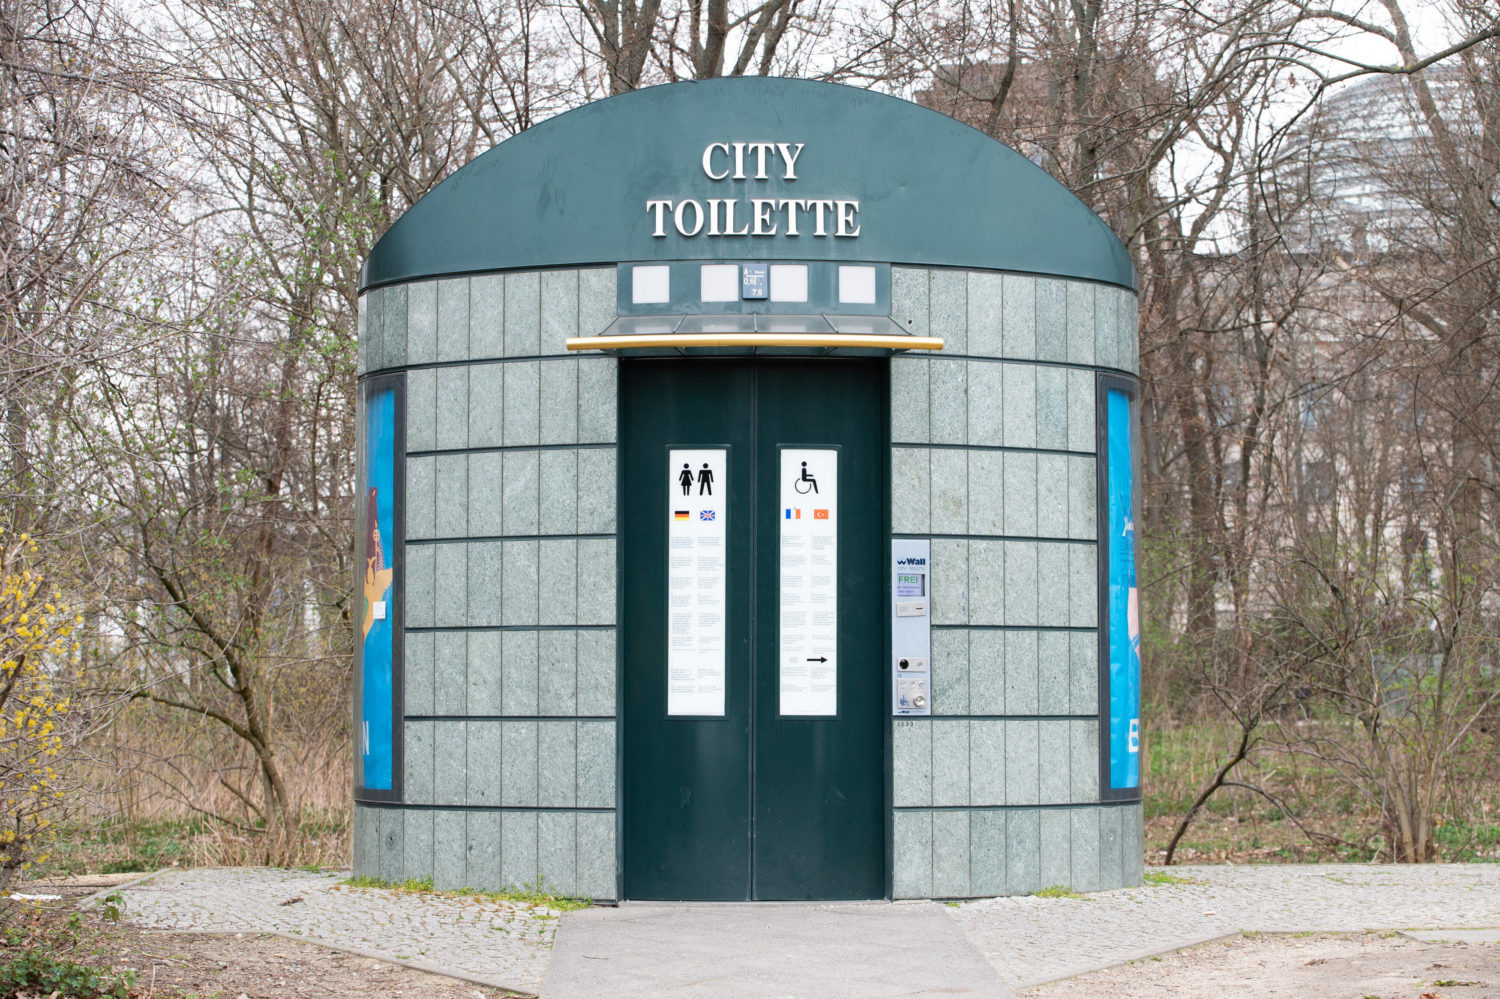 Öffentliche Toiletten: City Toilette in Berlin. Foto: Imago/Uwe Koch/Eibner-Pressefoto